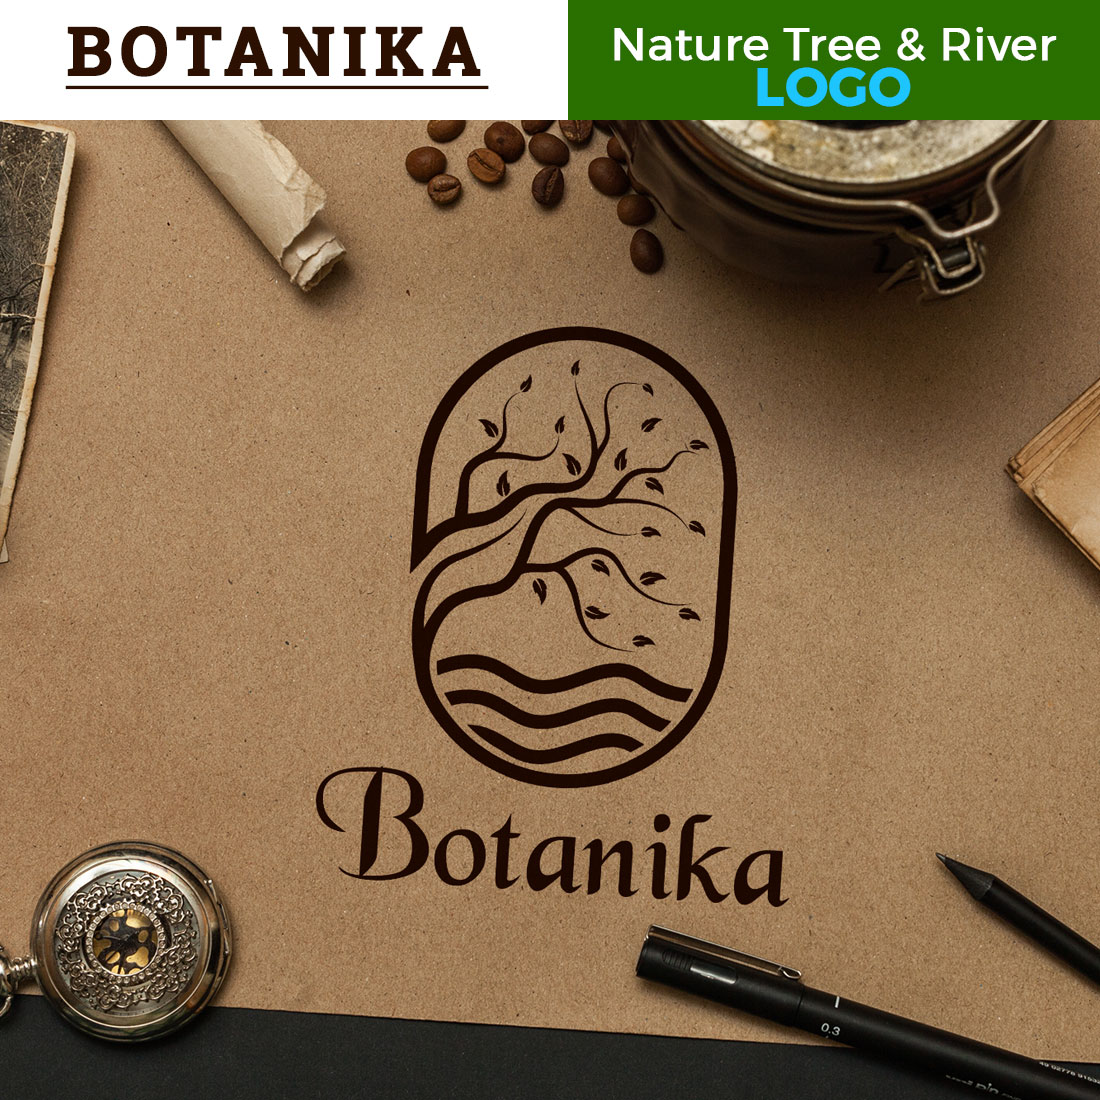 Green Tree Nature Logo Design Illustration cover image.